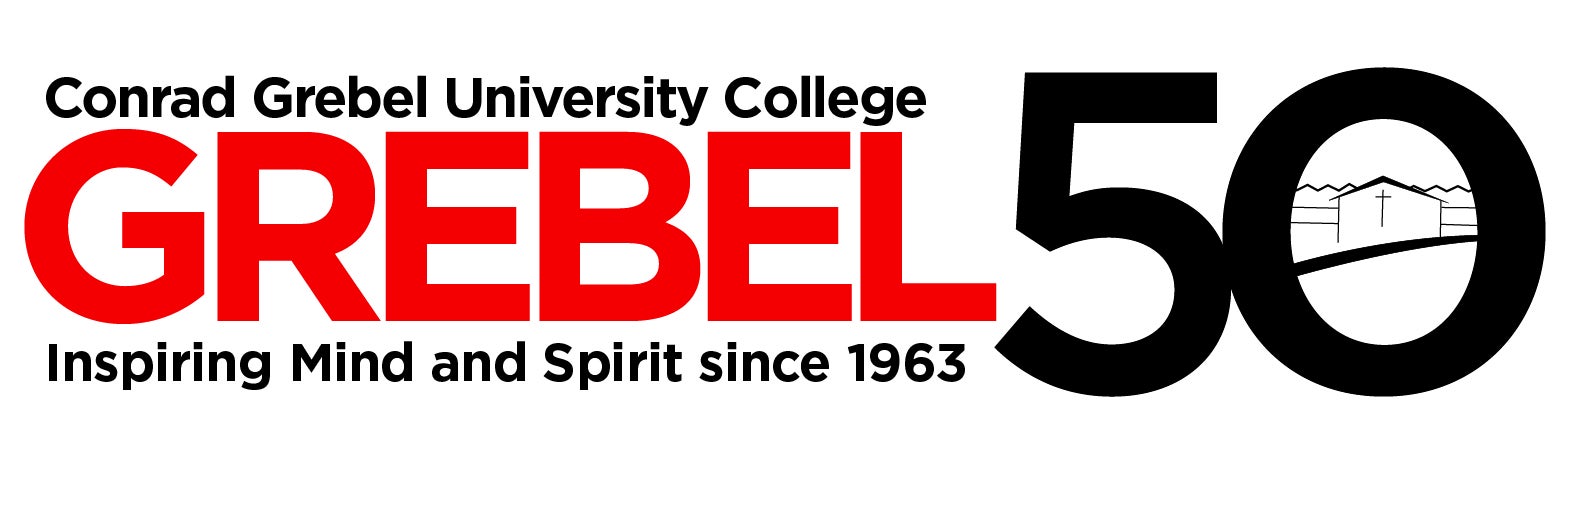 Conrad Grebel University College logo